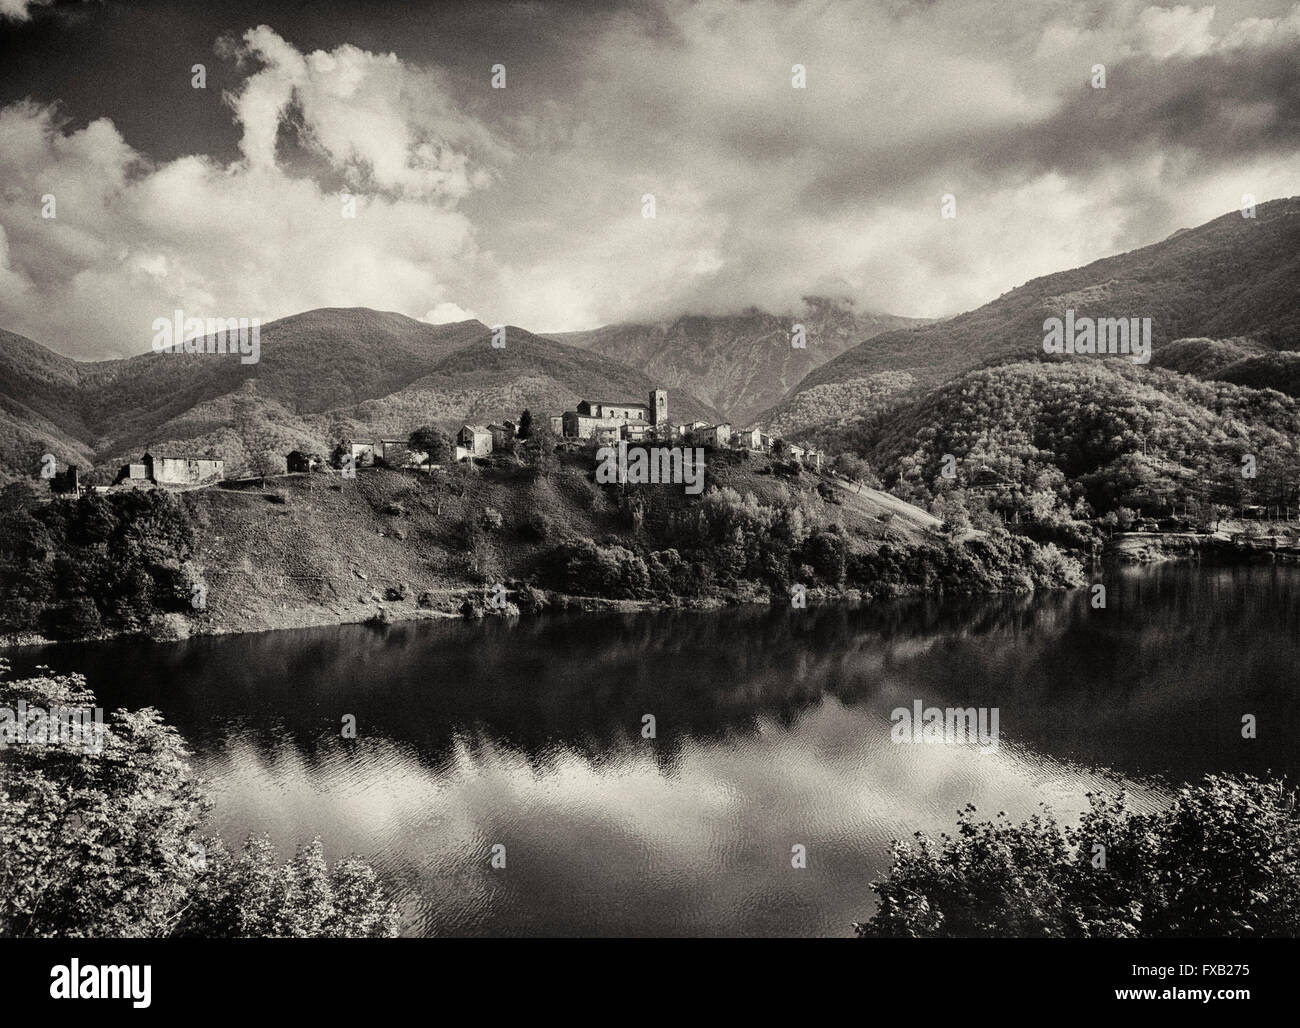 Tuscany's Vagli Lake formed by the flooding of Fabbriche di Careggine village to create a hydro-electric dam. Stock Photo